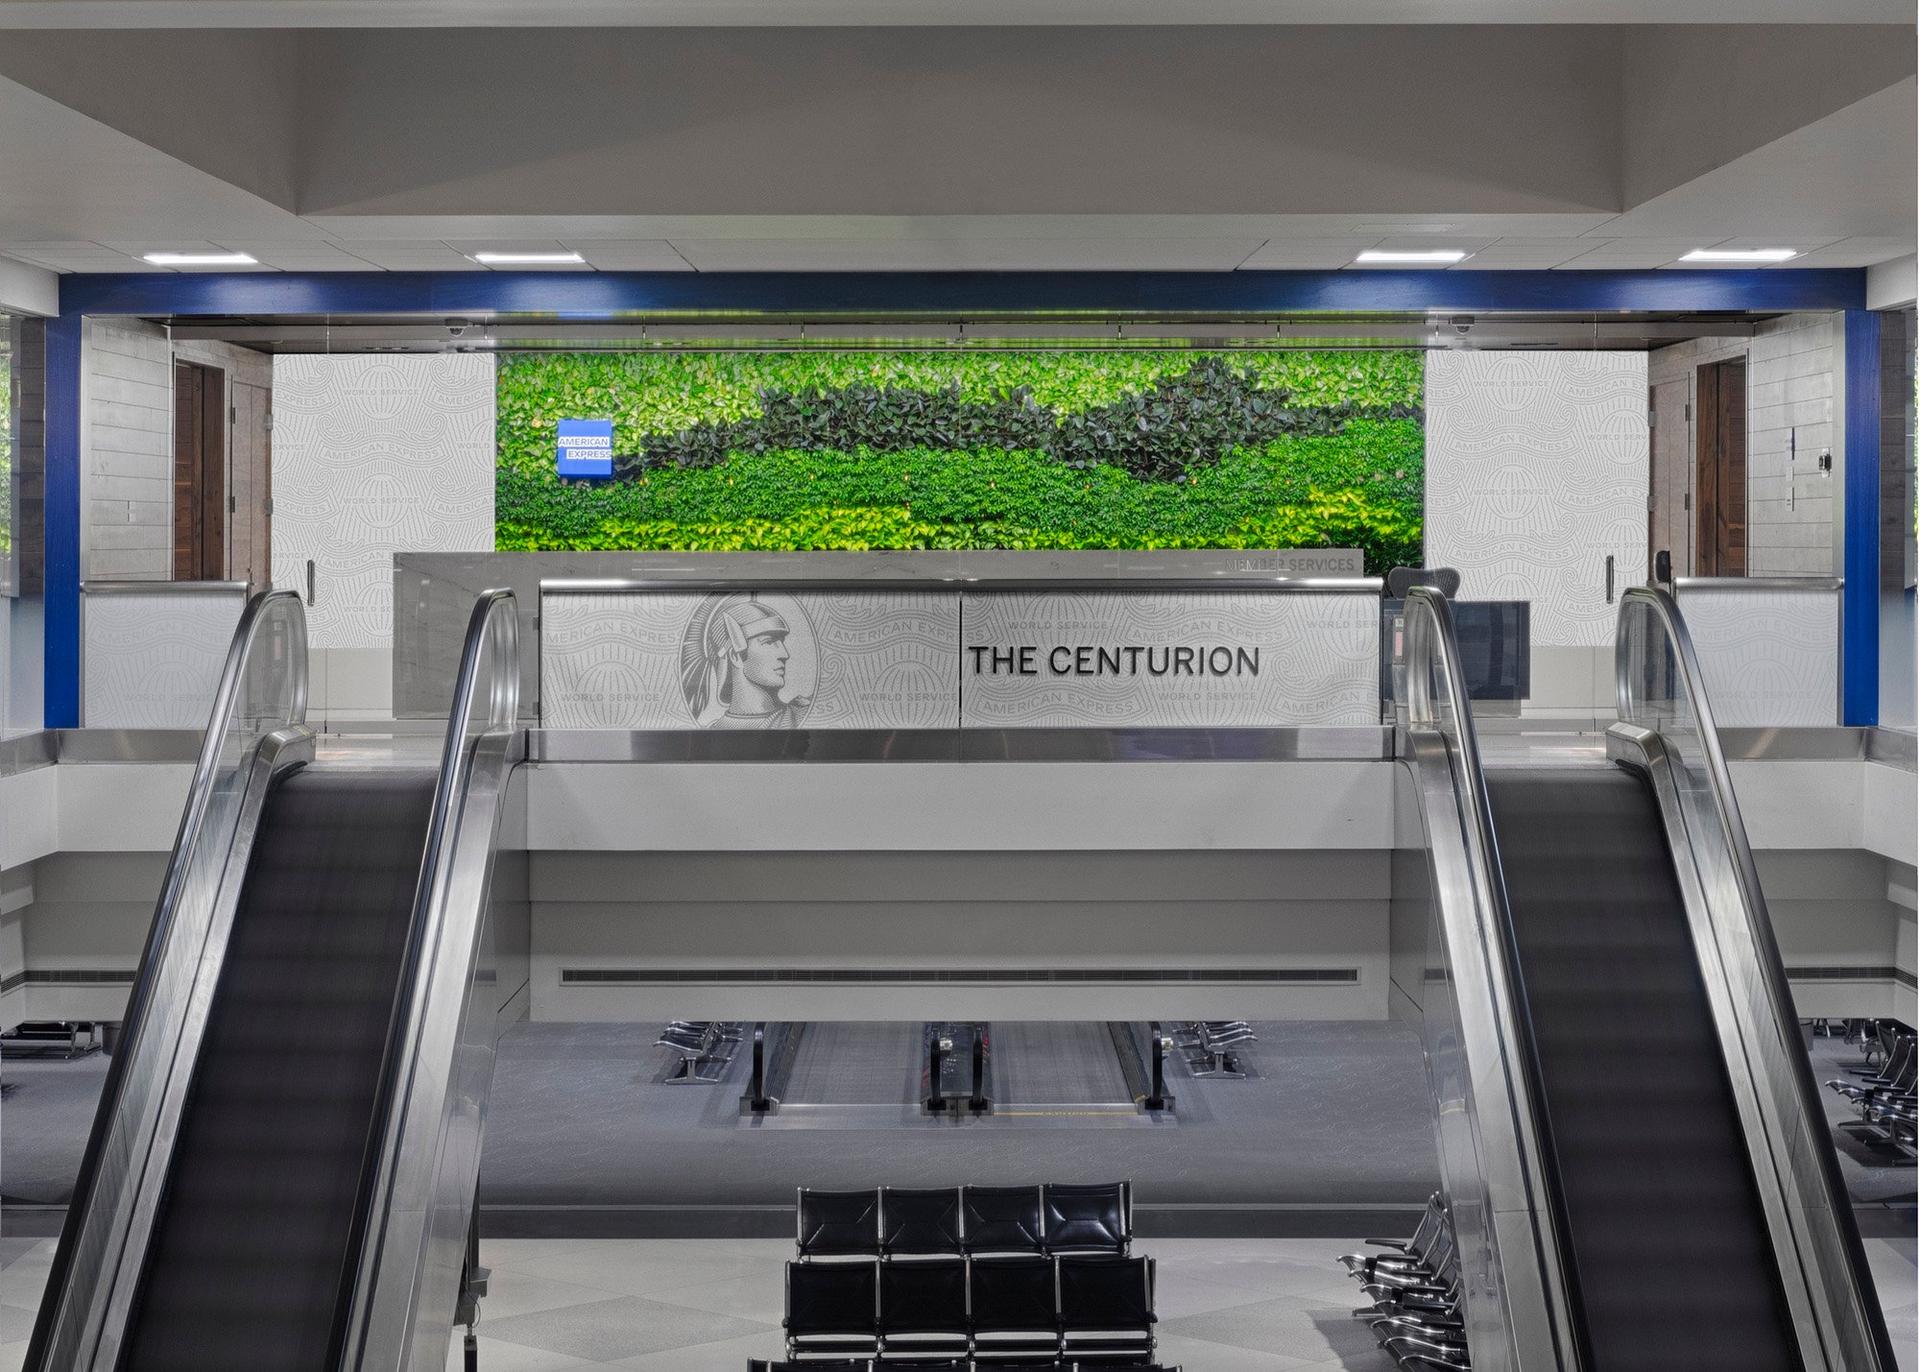 The Centurion Lounge image 1 of 11